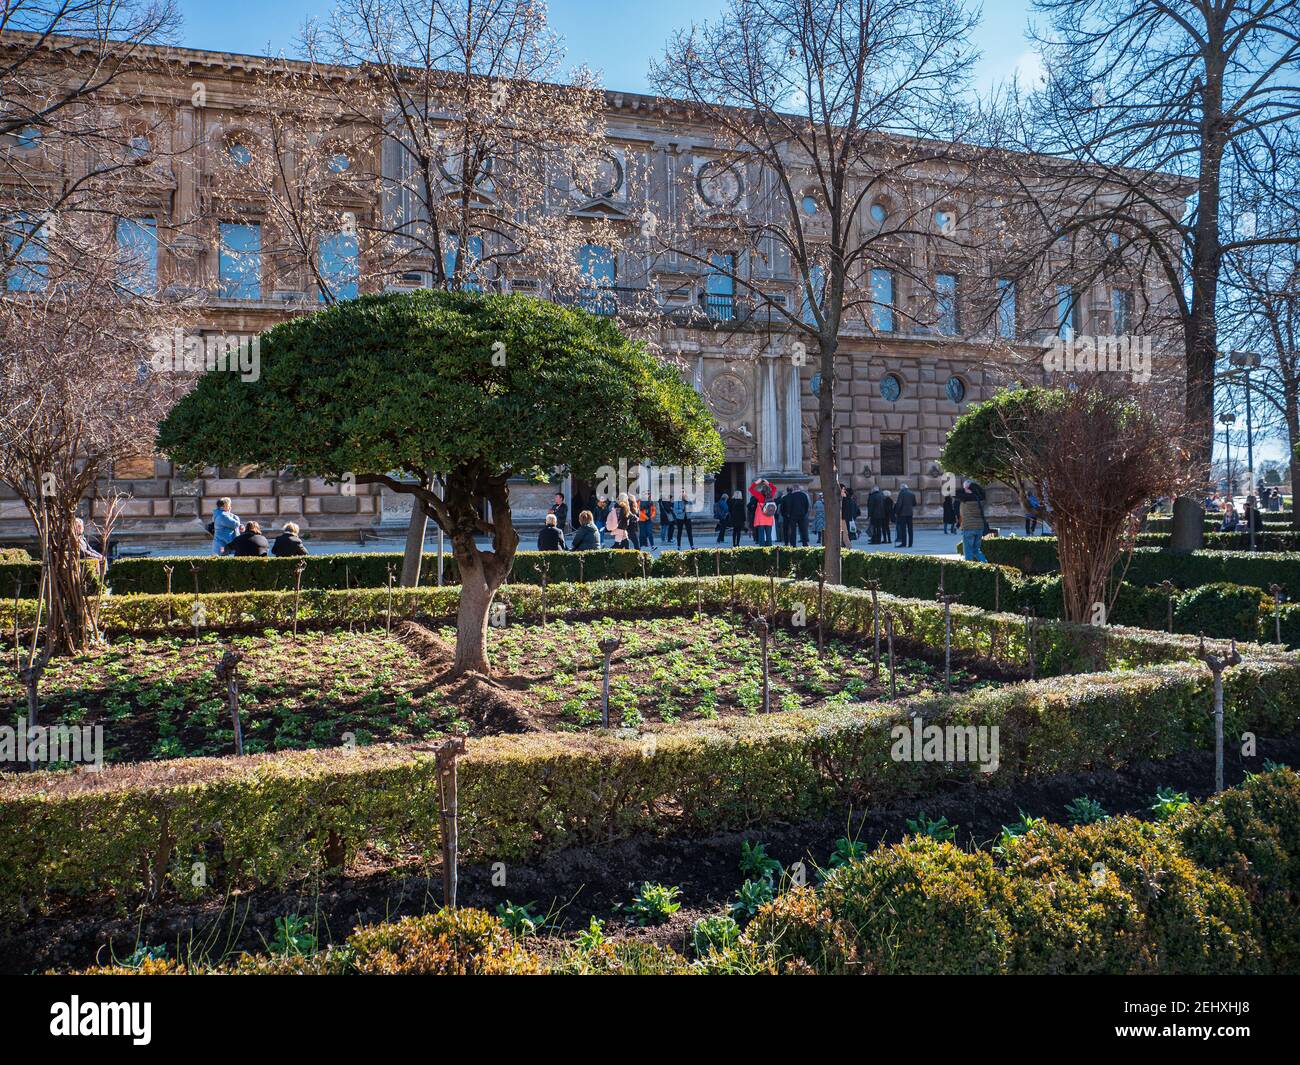 The Palace of Charles V at The Alhambra Granada Spain Stock Photo